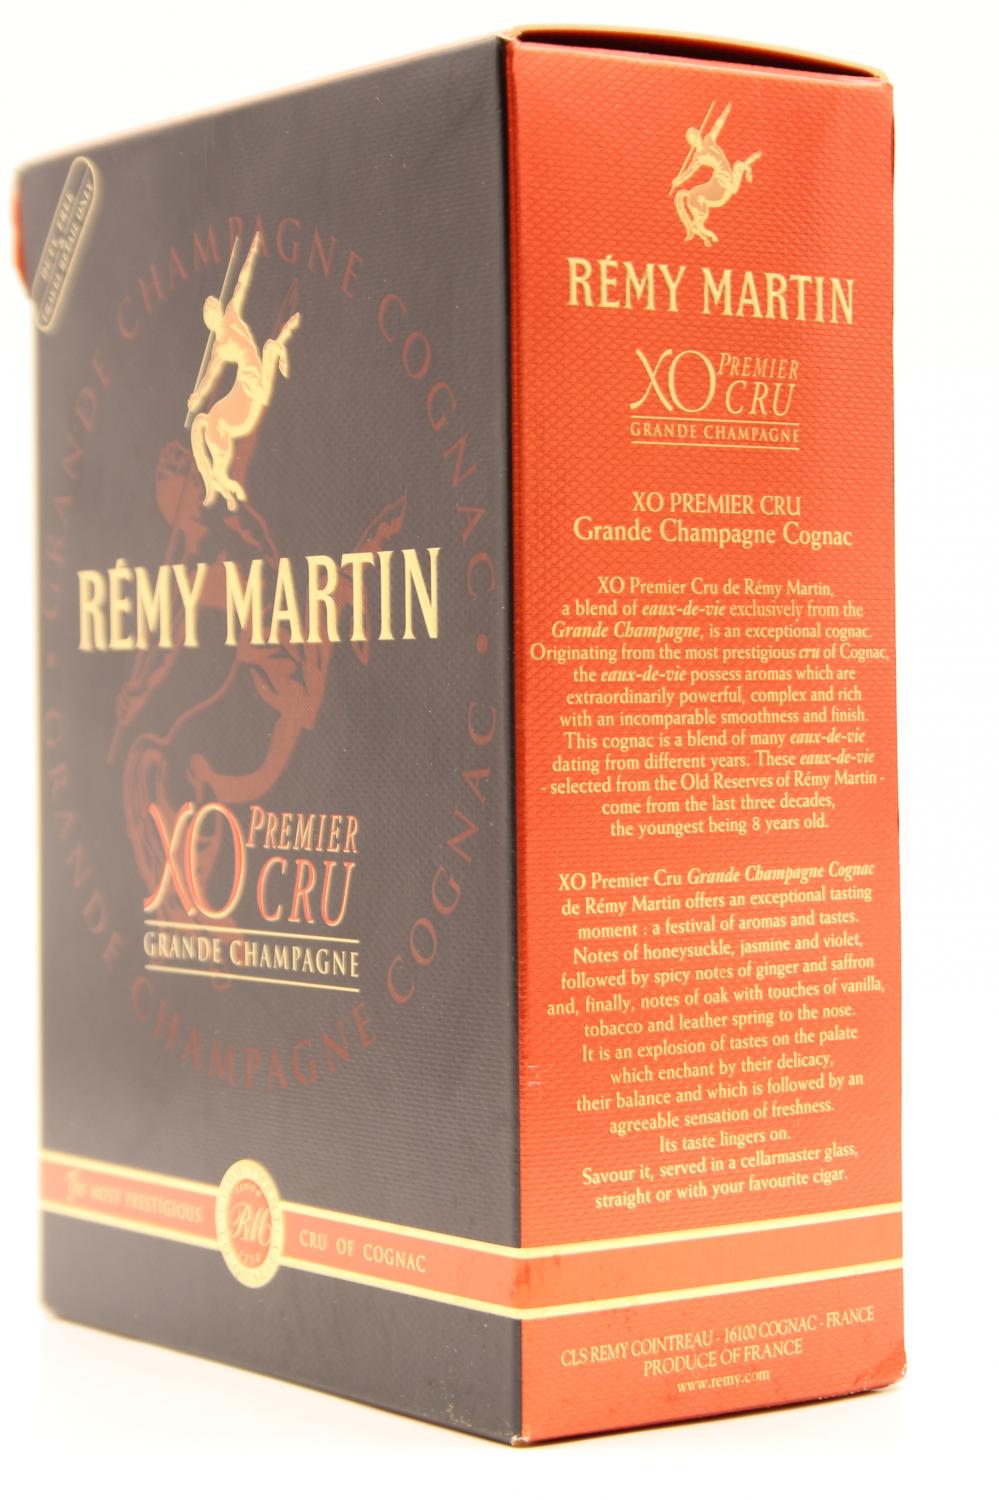 1) Remy Martin X.O. Premier Cru Grande Champagne Cognac